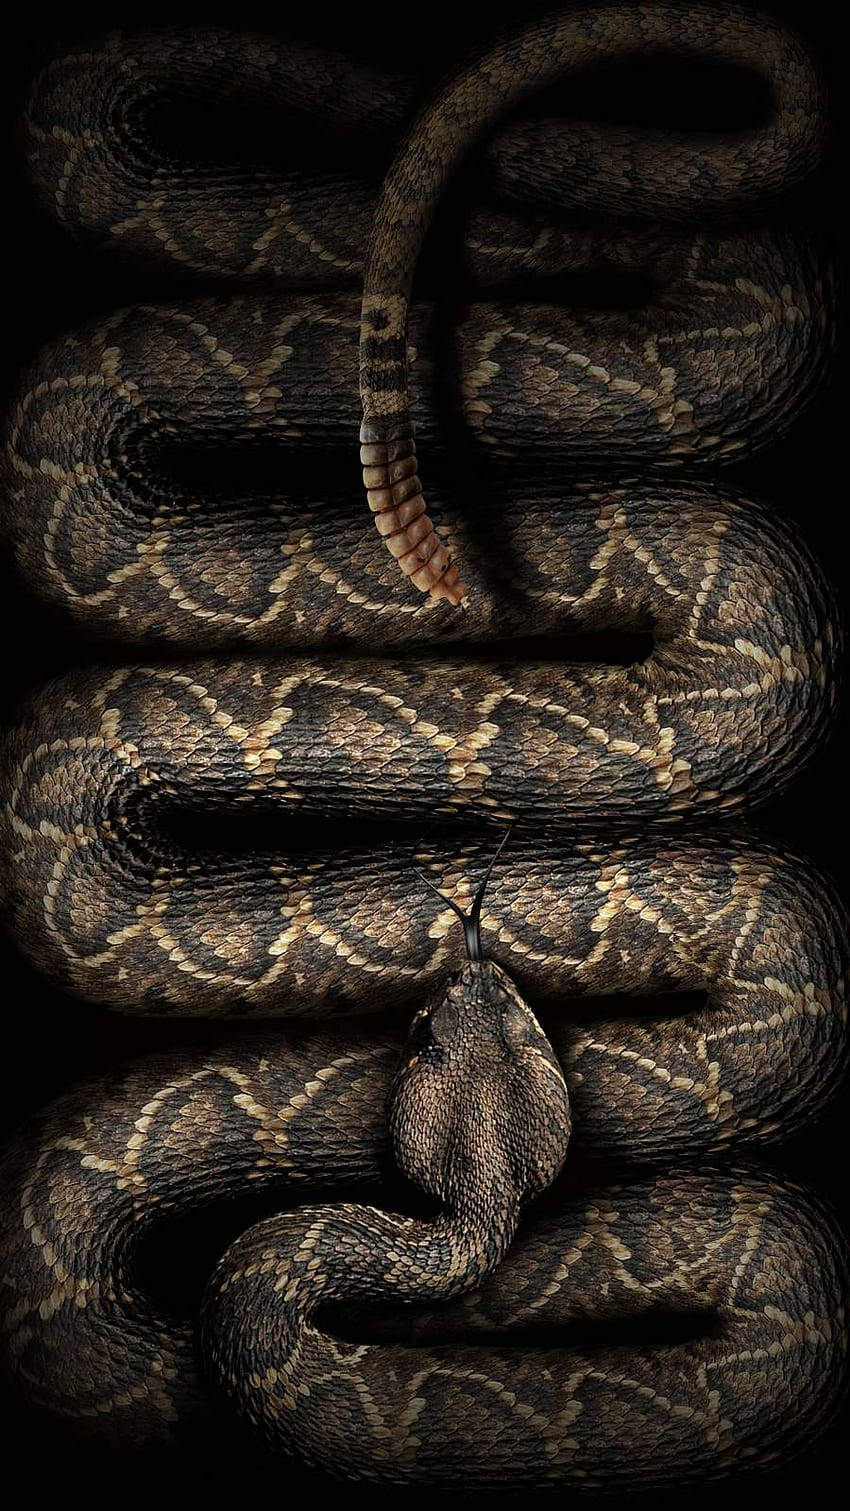 30000 Rattlesnake Pictures  Download Free Images on Unsplash